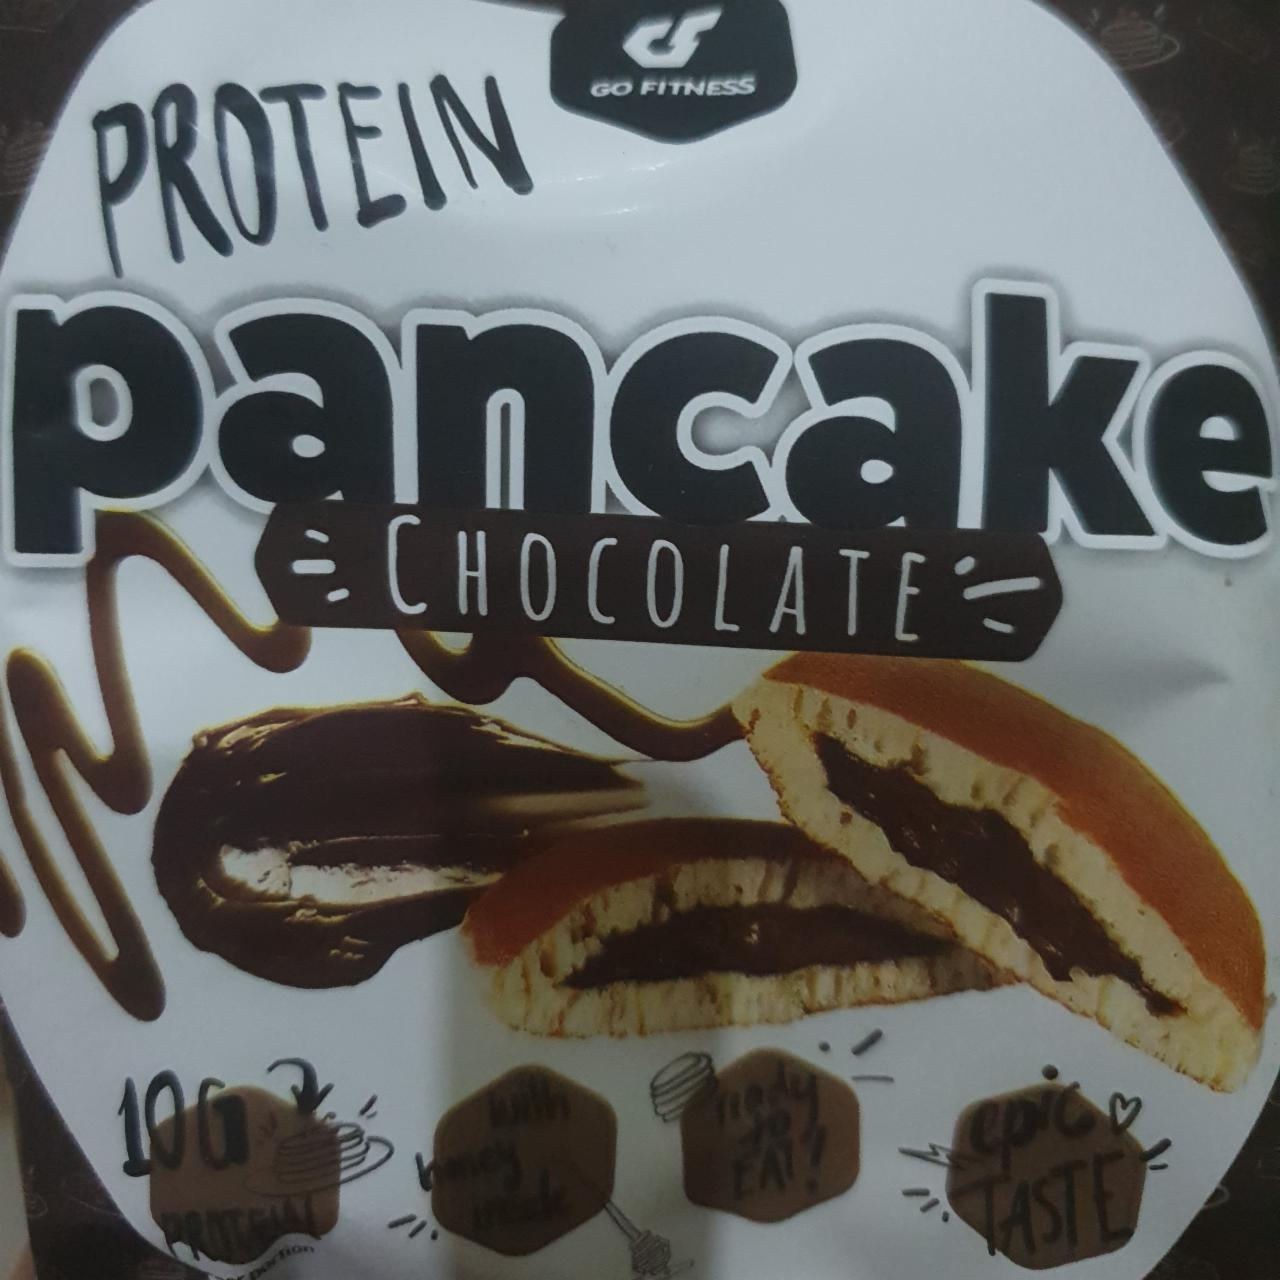 Fotografie - Protein pancake chocolate Go Fitness